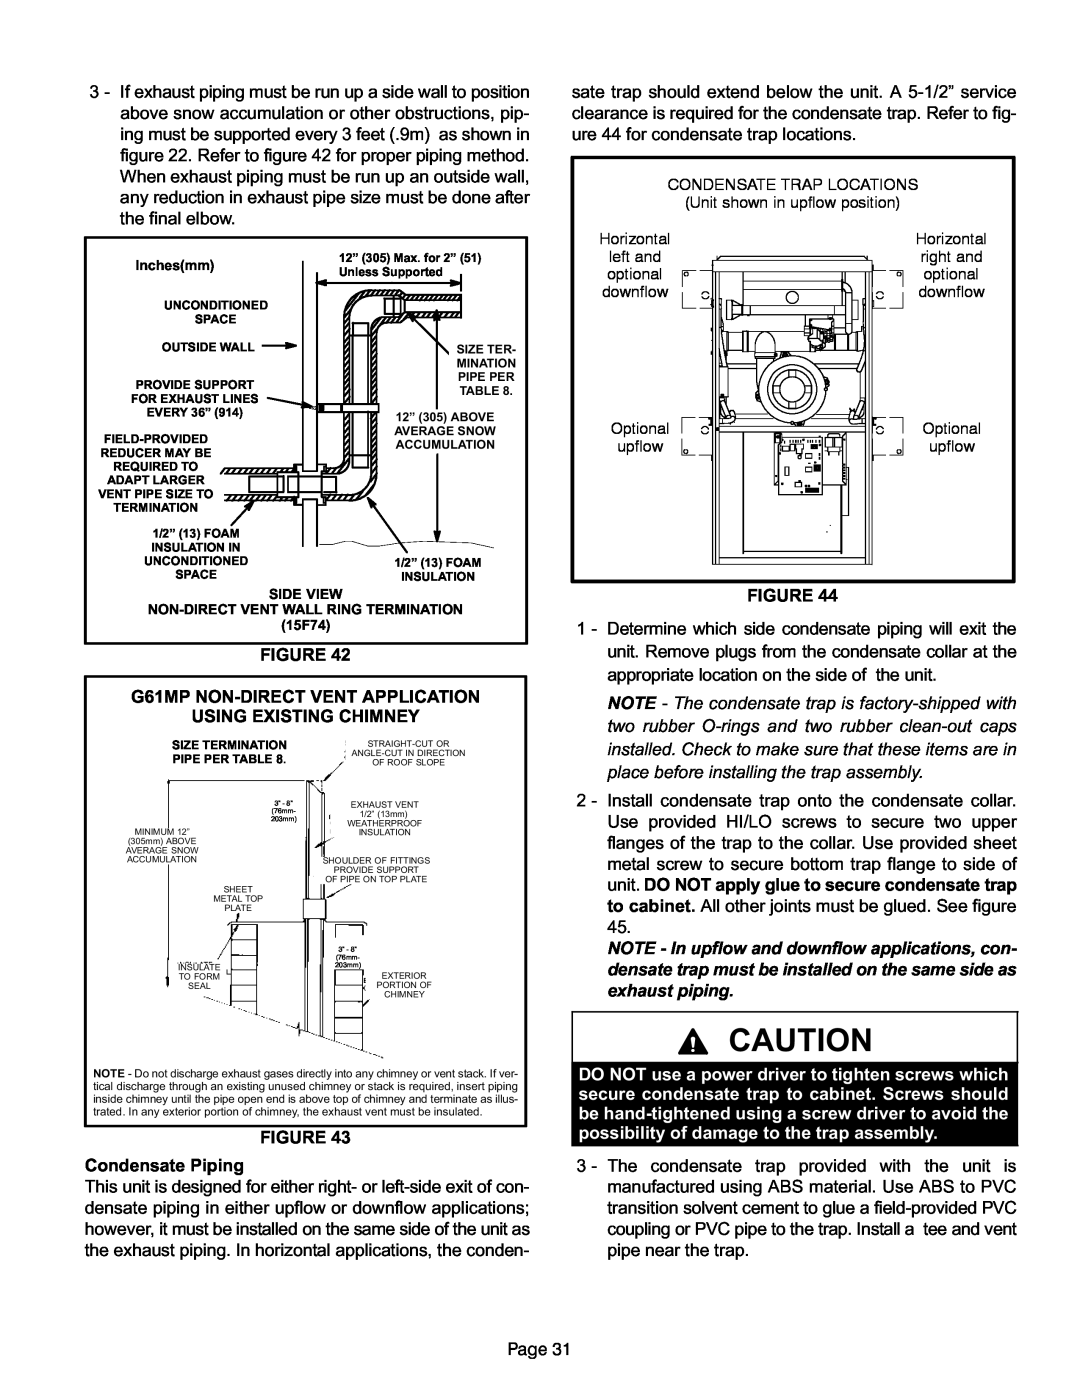 Lennox International Inc G61MP Series Units, Gas Units installation instructions FIGURE G61MP NON−DIRECT VENT APPLICATION 